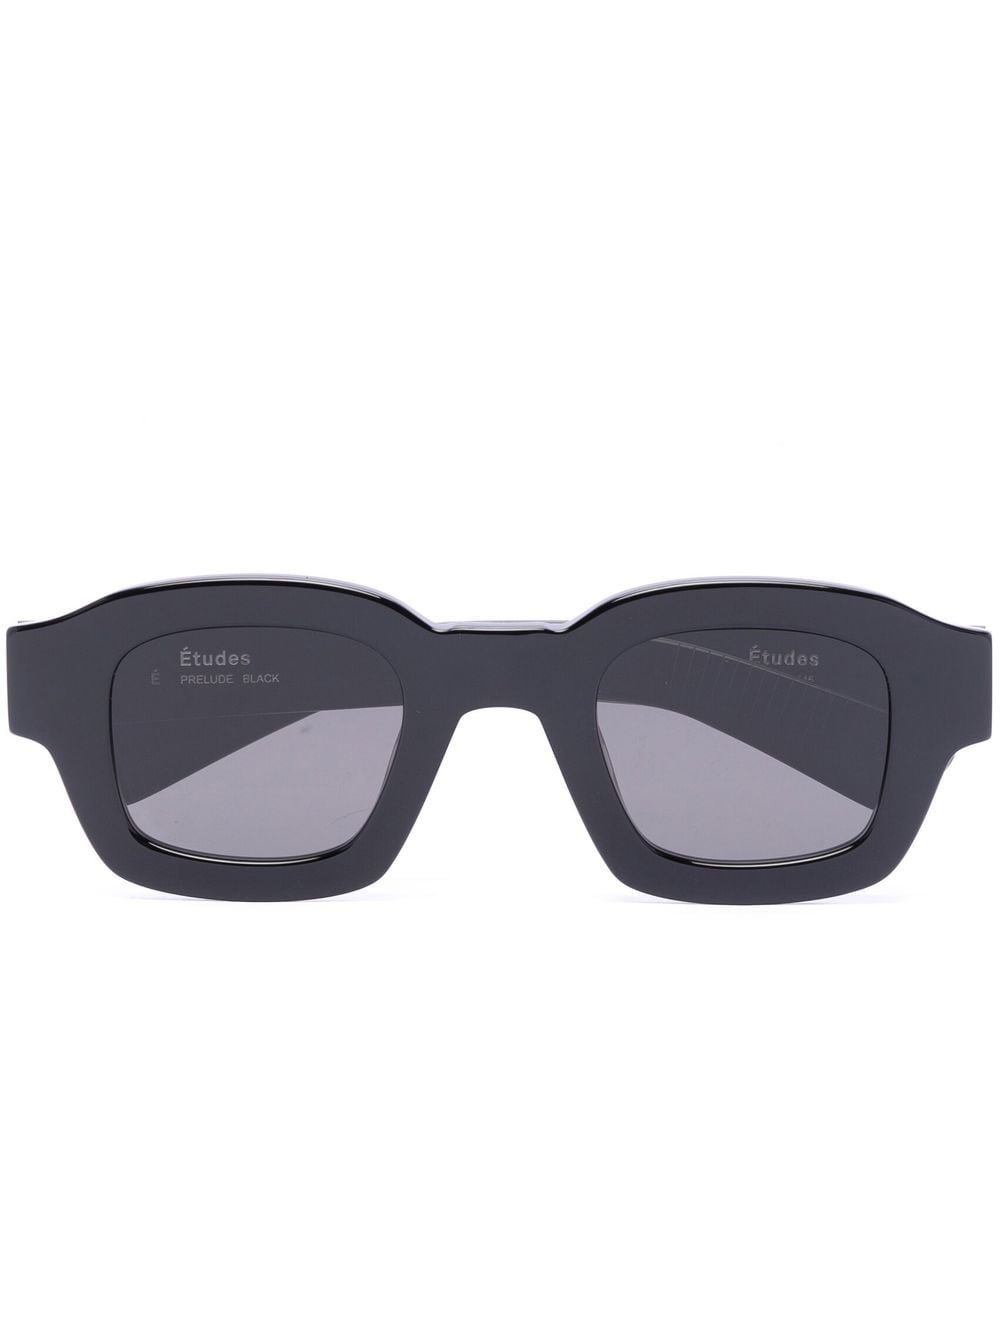 Image 1 of Etudes square-frame sunglasses